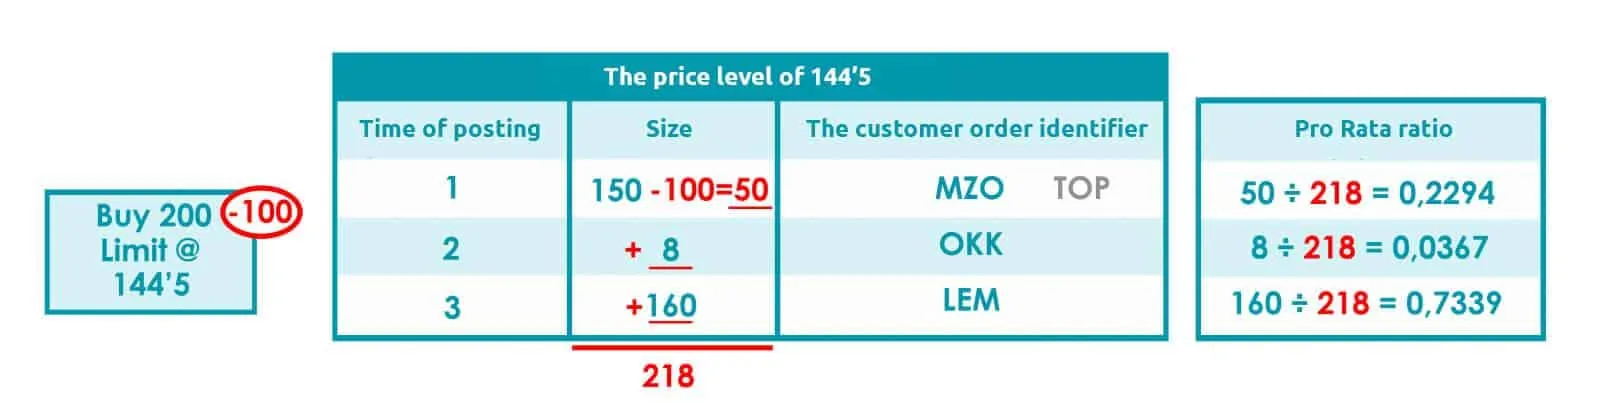 The price level of 144’5